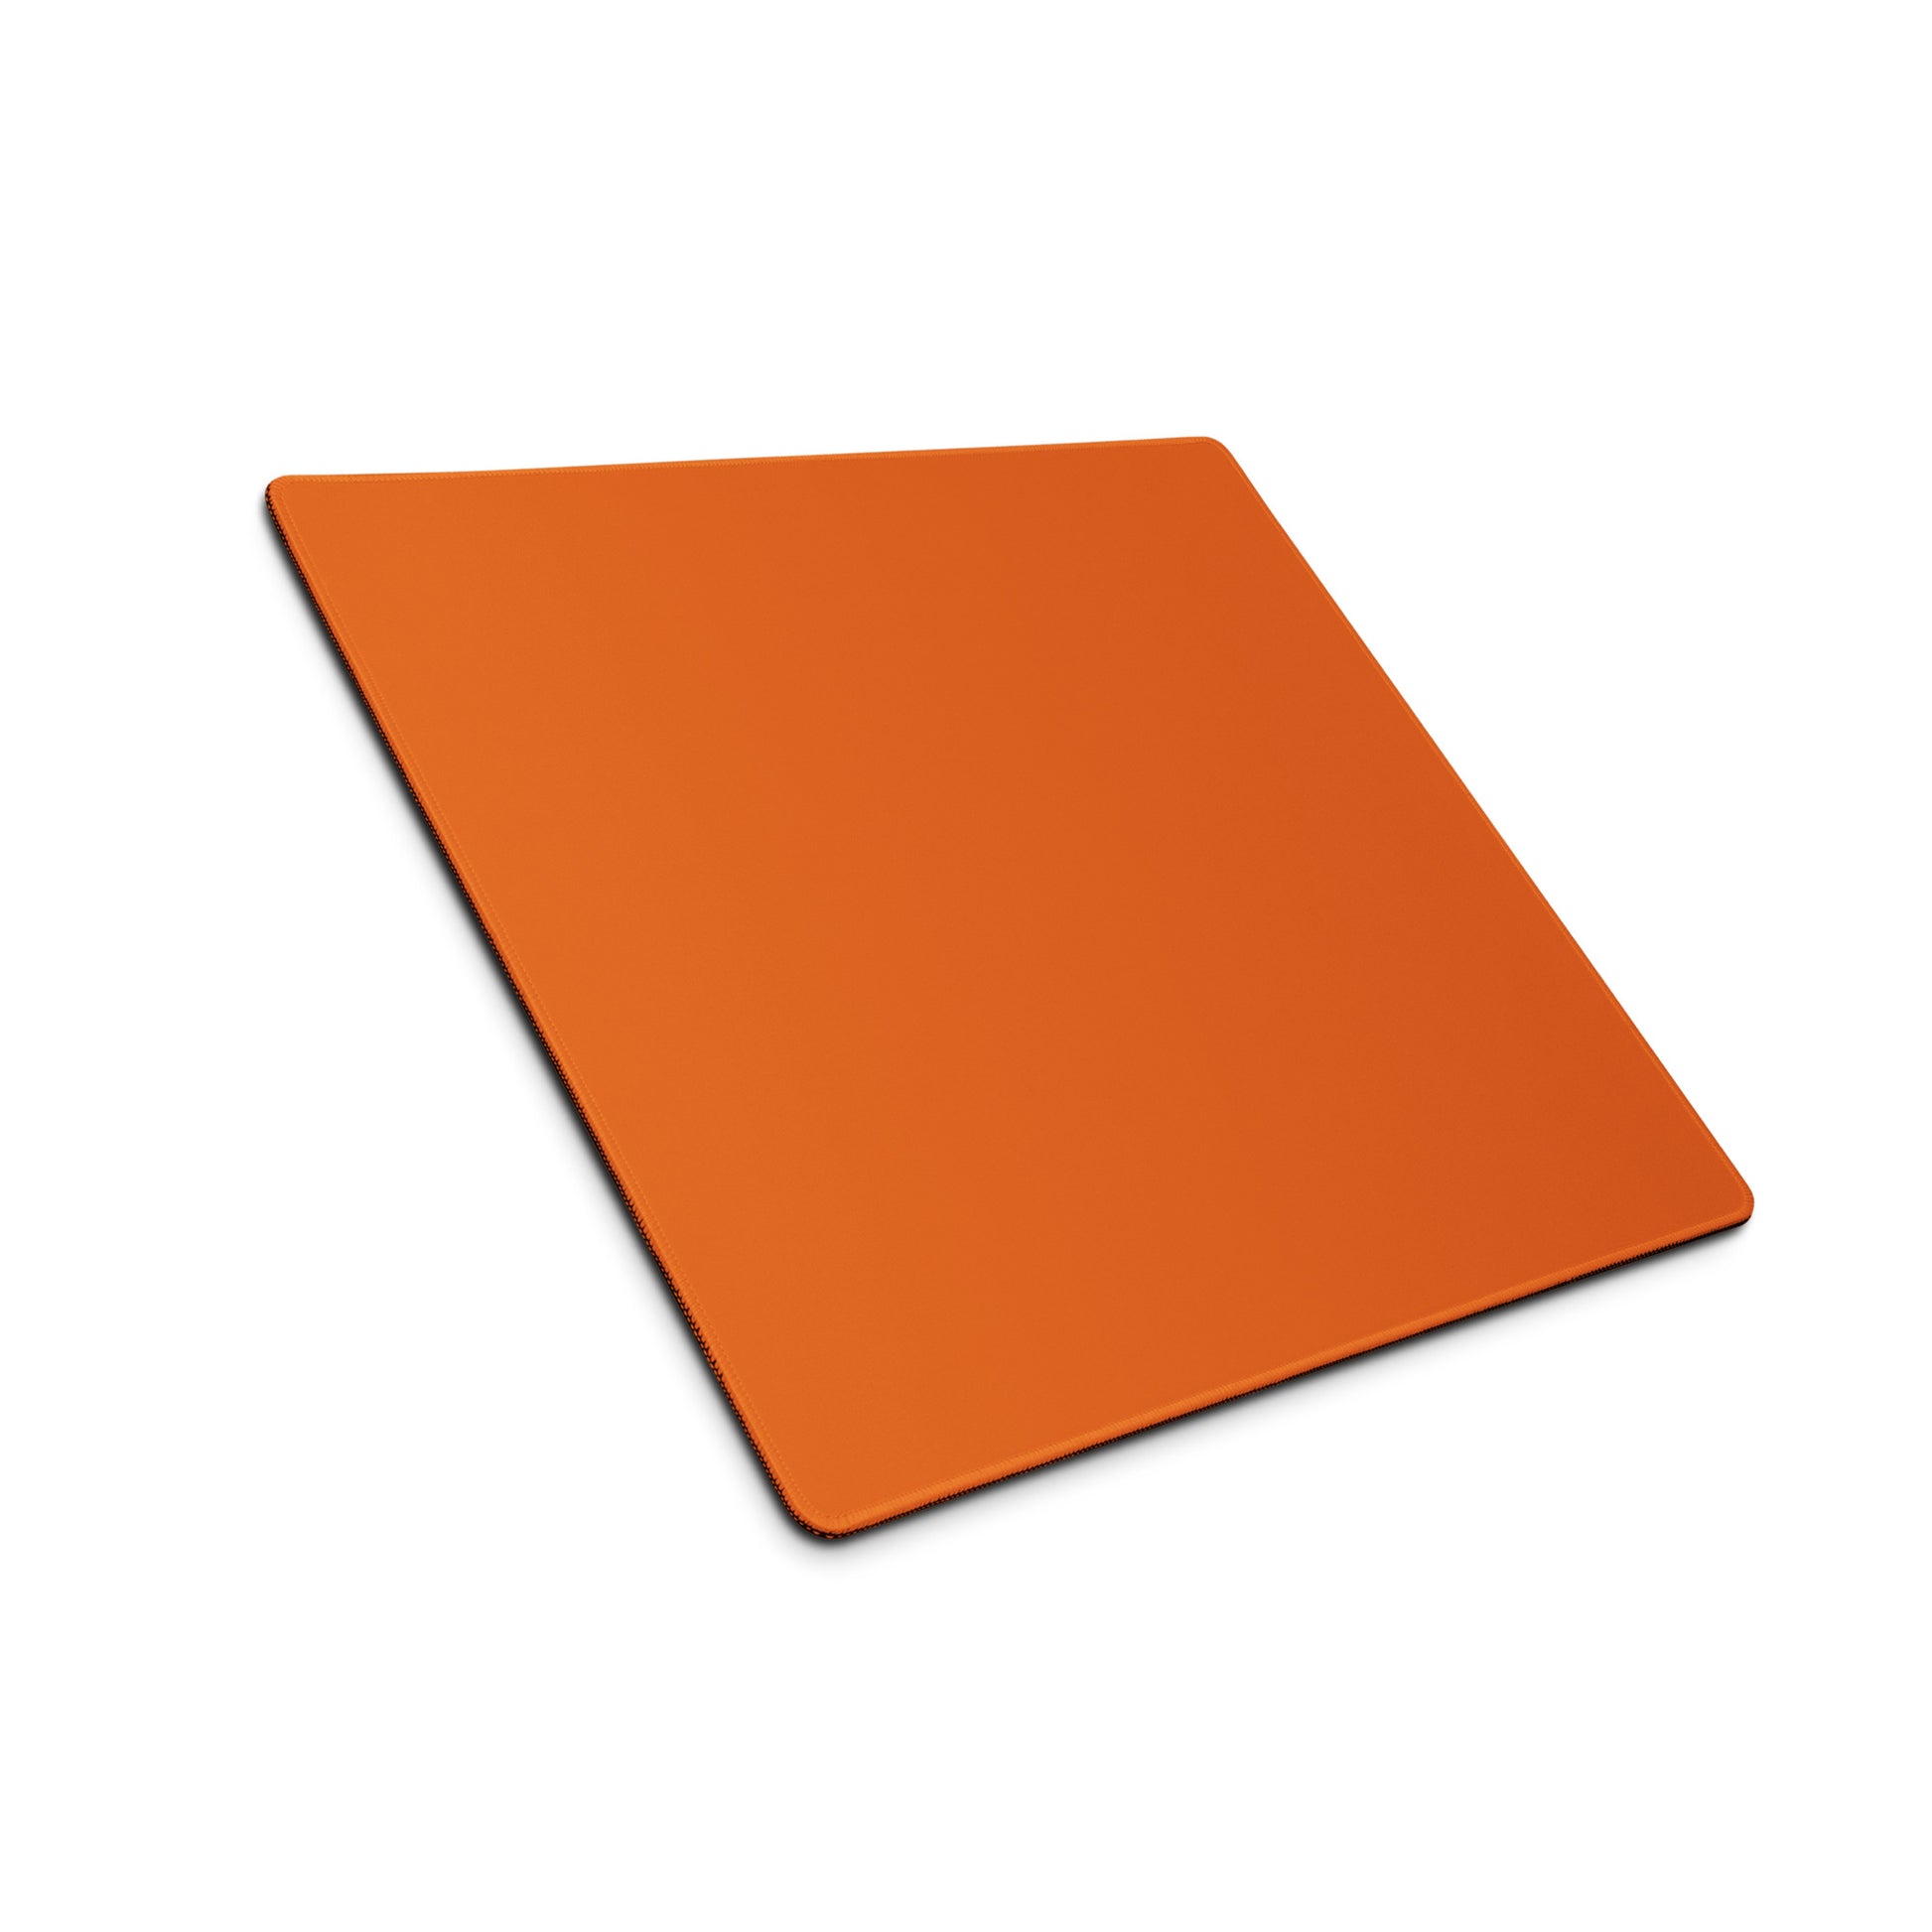 An 18" x 16" orange gaming desk pad sitting at an angle.